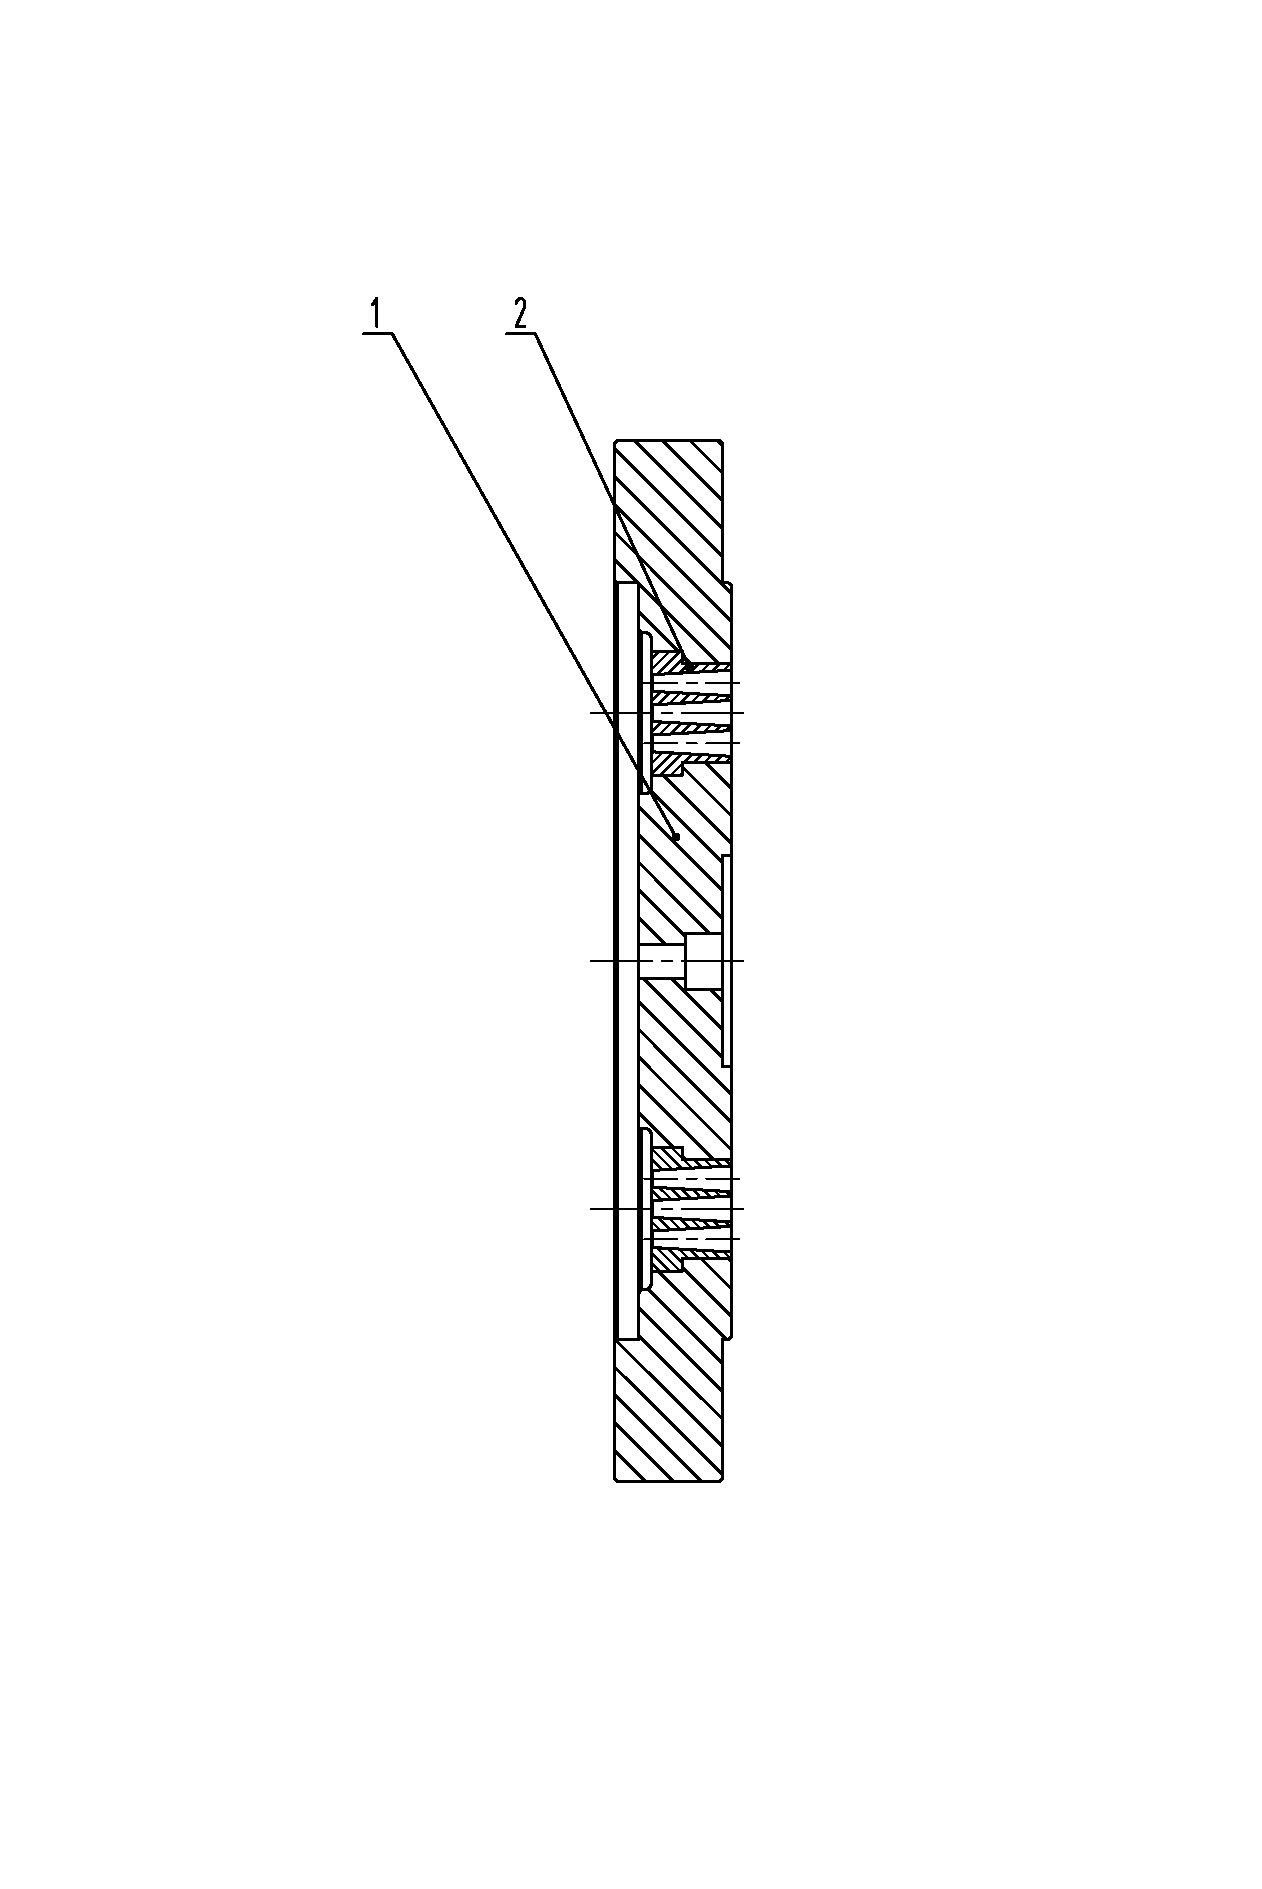 Discharging template of bulking machine